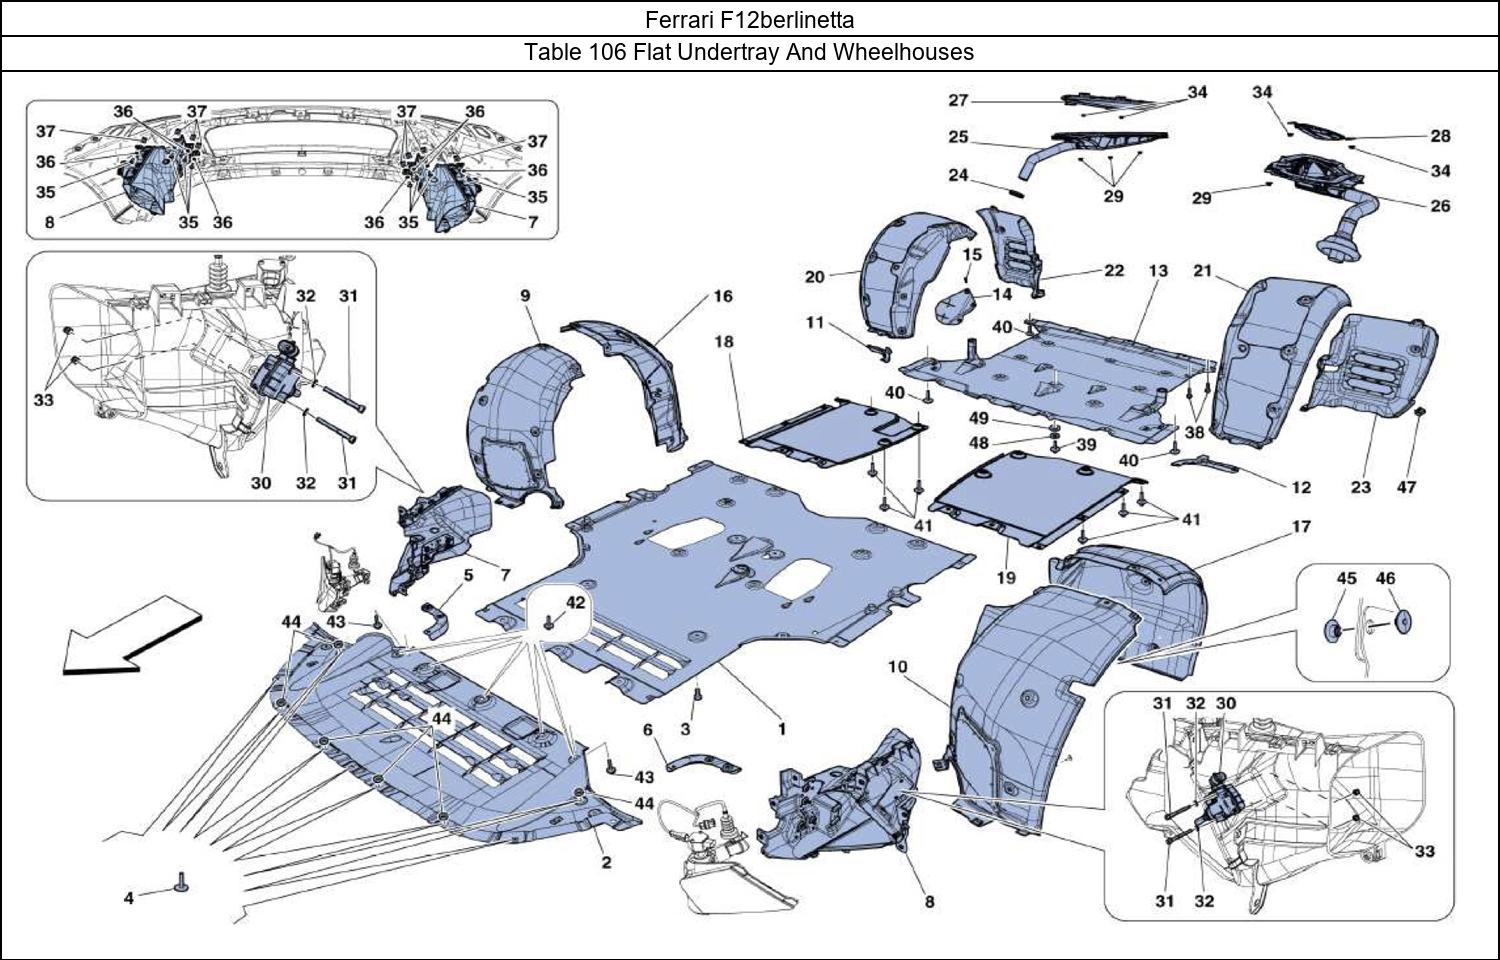 Ferrari Parts Ferrari F12berlinetta Table 106 Flat Undertray And Wheelhouses